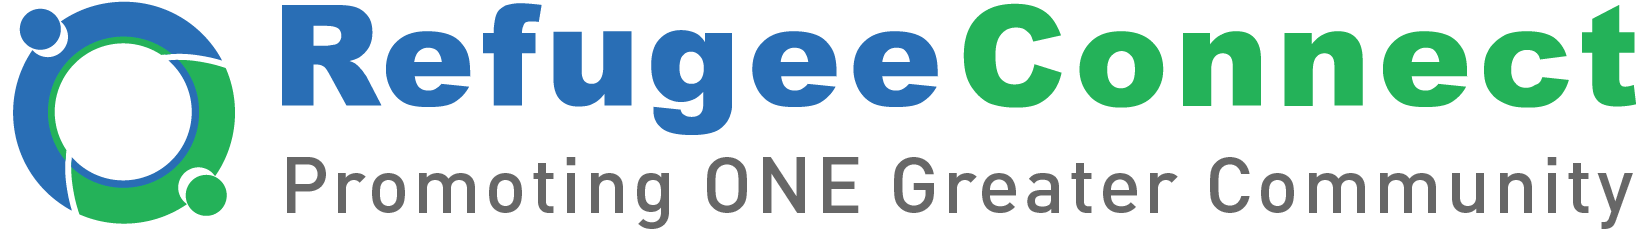 Refugee Connect logo